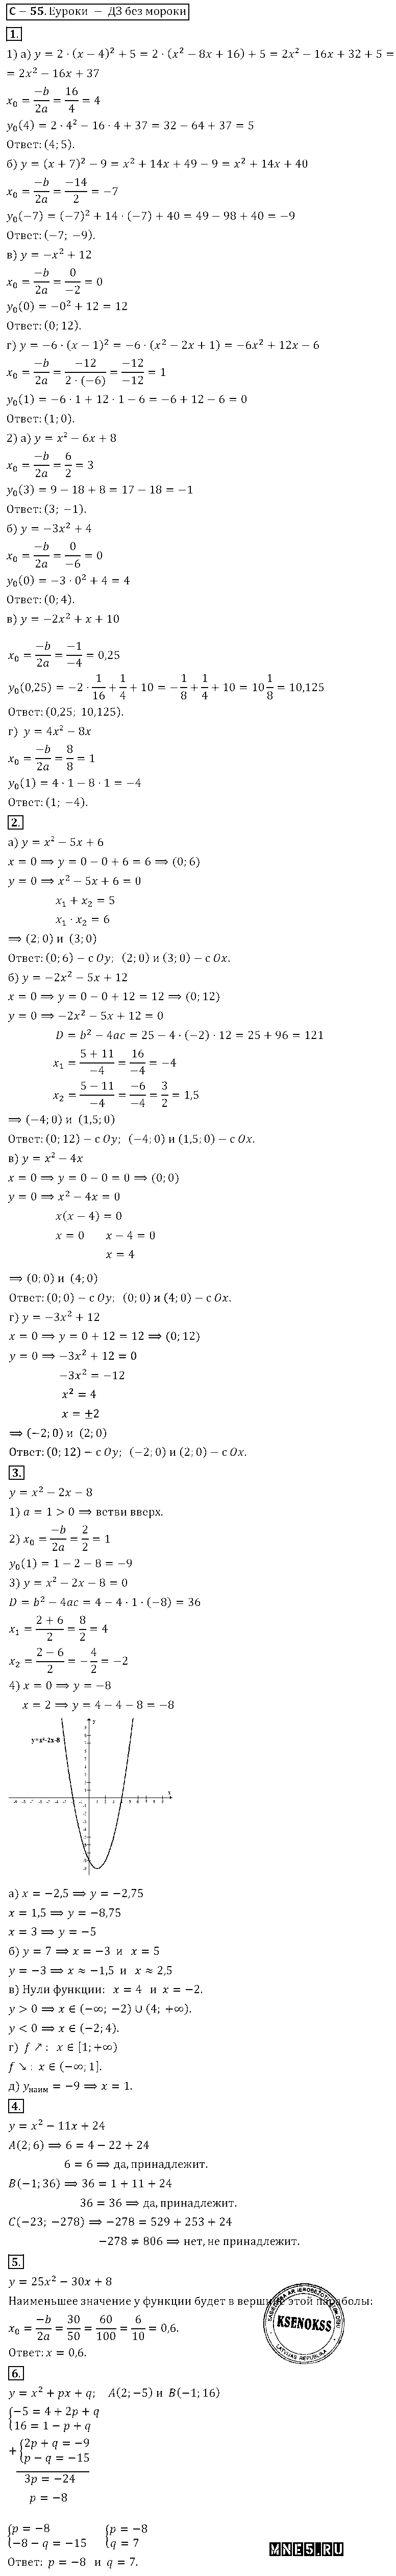 ГДЗ Алгебра 8 класс - С-55(с). График функции y = ax²+bx+c